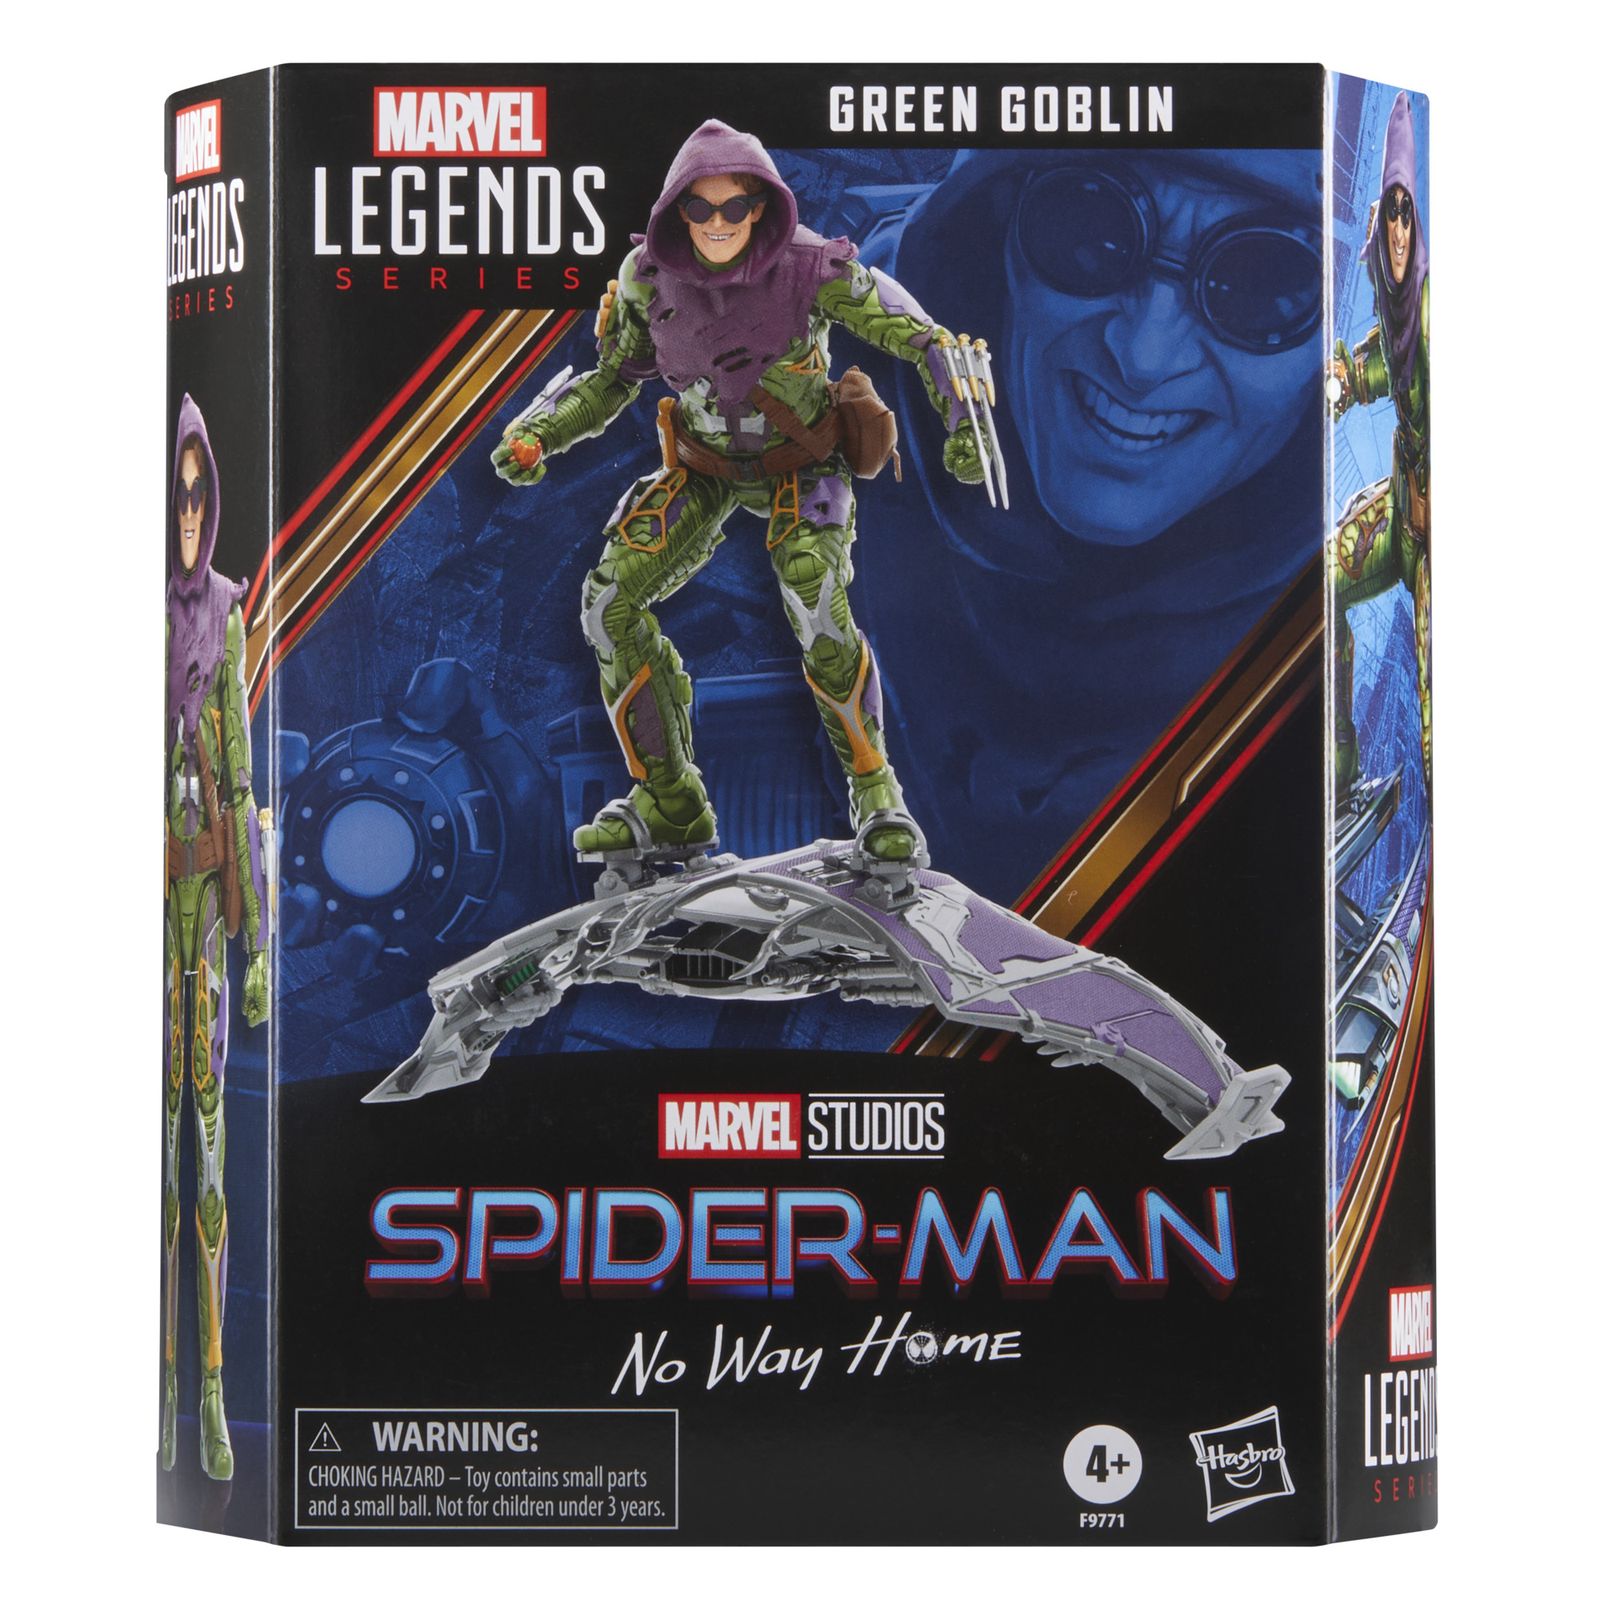 Marvel Legends Series Action Figurine Compound Hulk 15cm